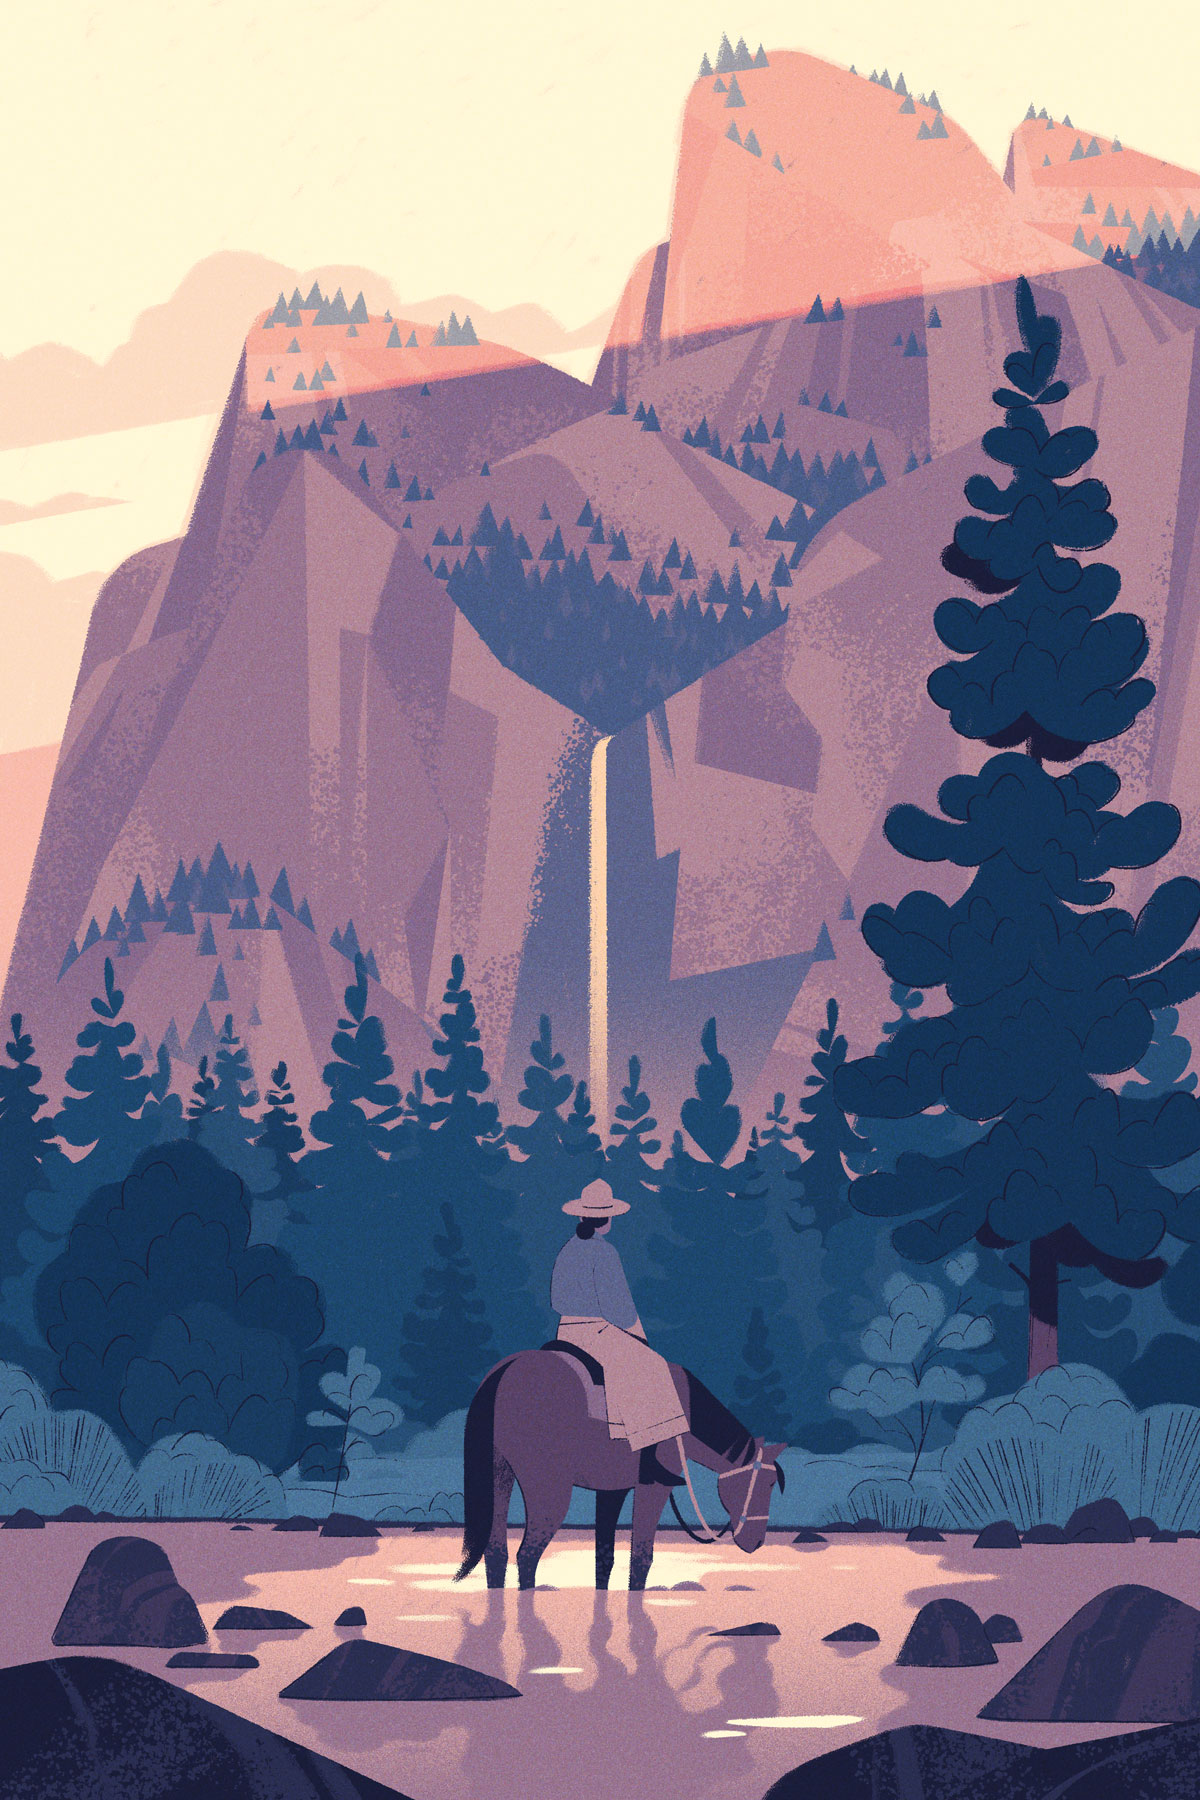 The Yosemite ranger